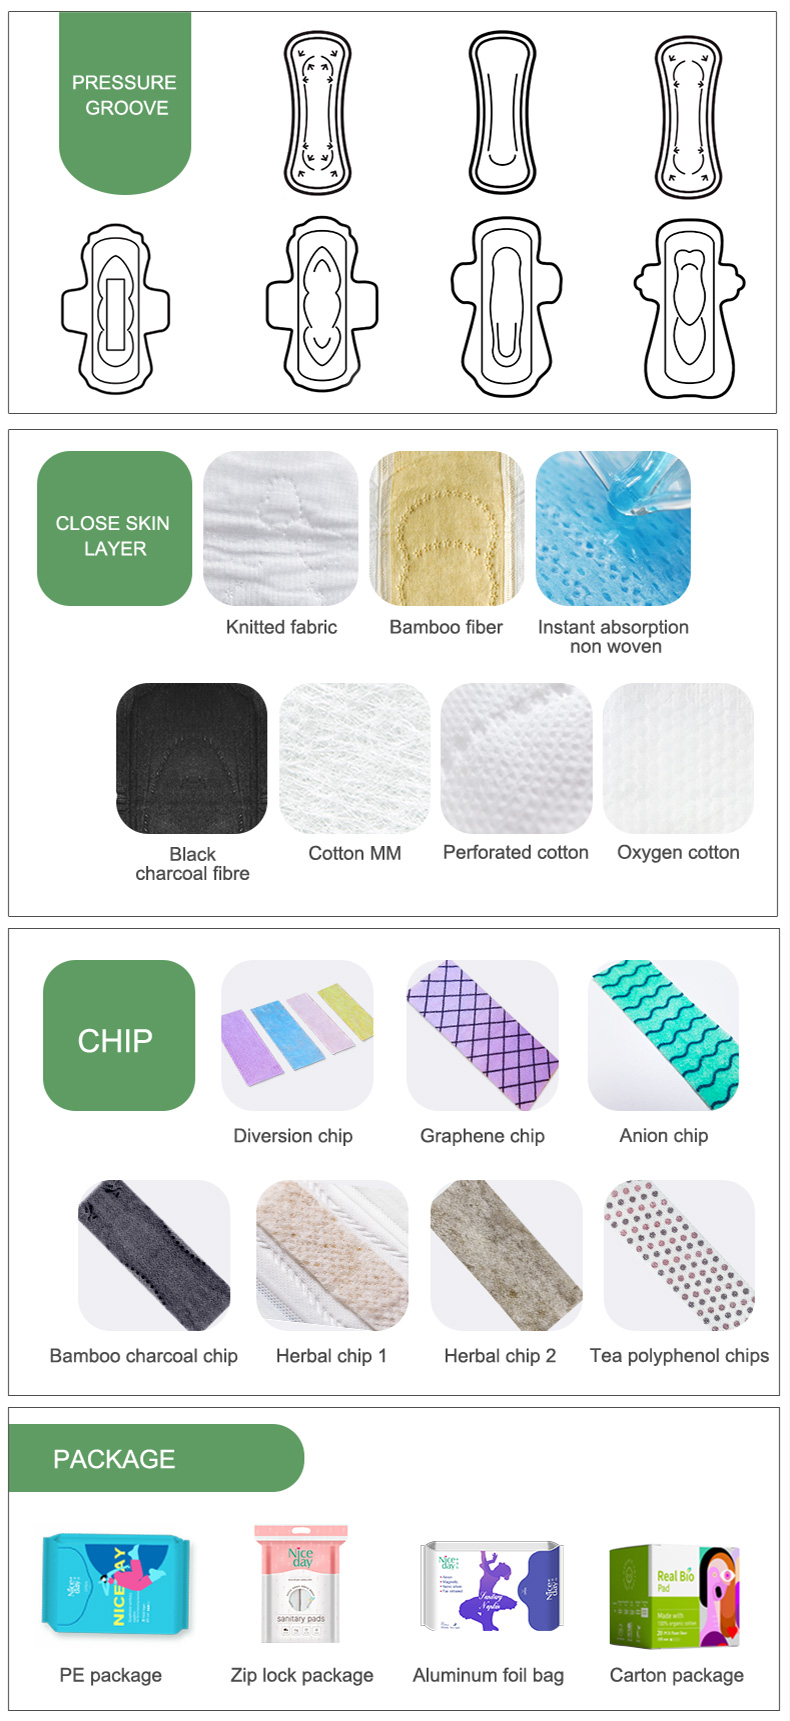 High quality aloe vera sanitary pad for girls high absorbency leakage prevention feminine pads NDC-5-245Niceday